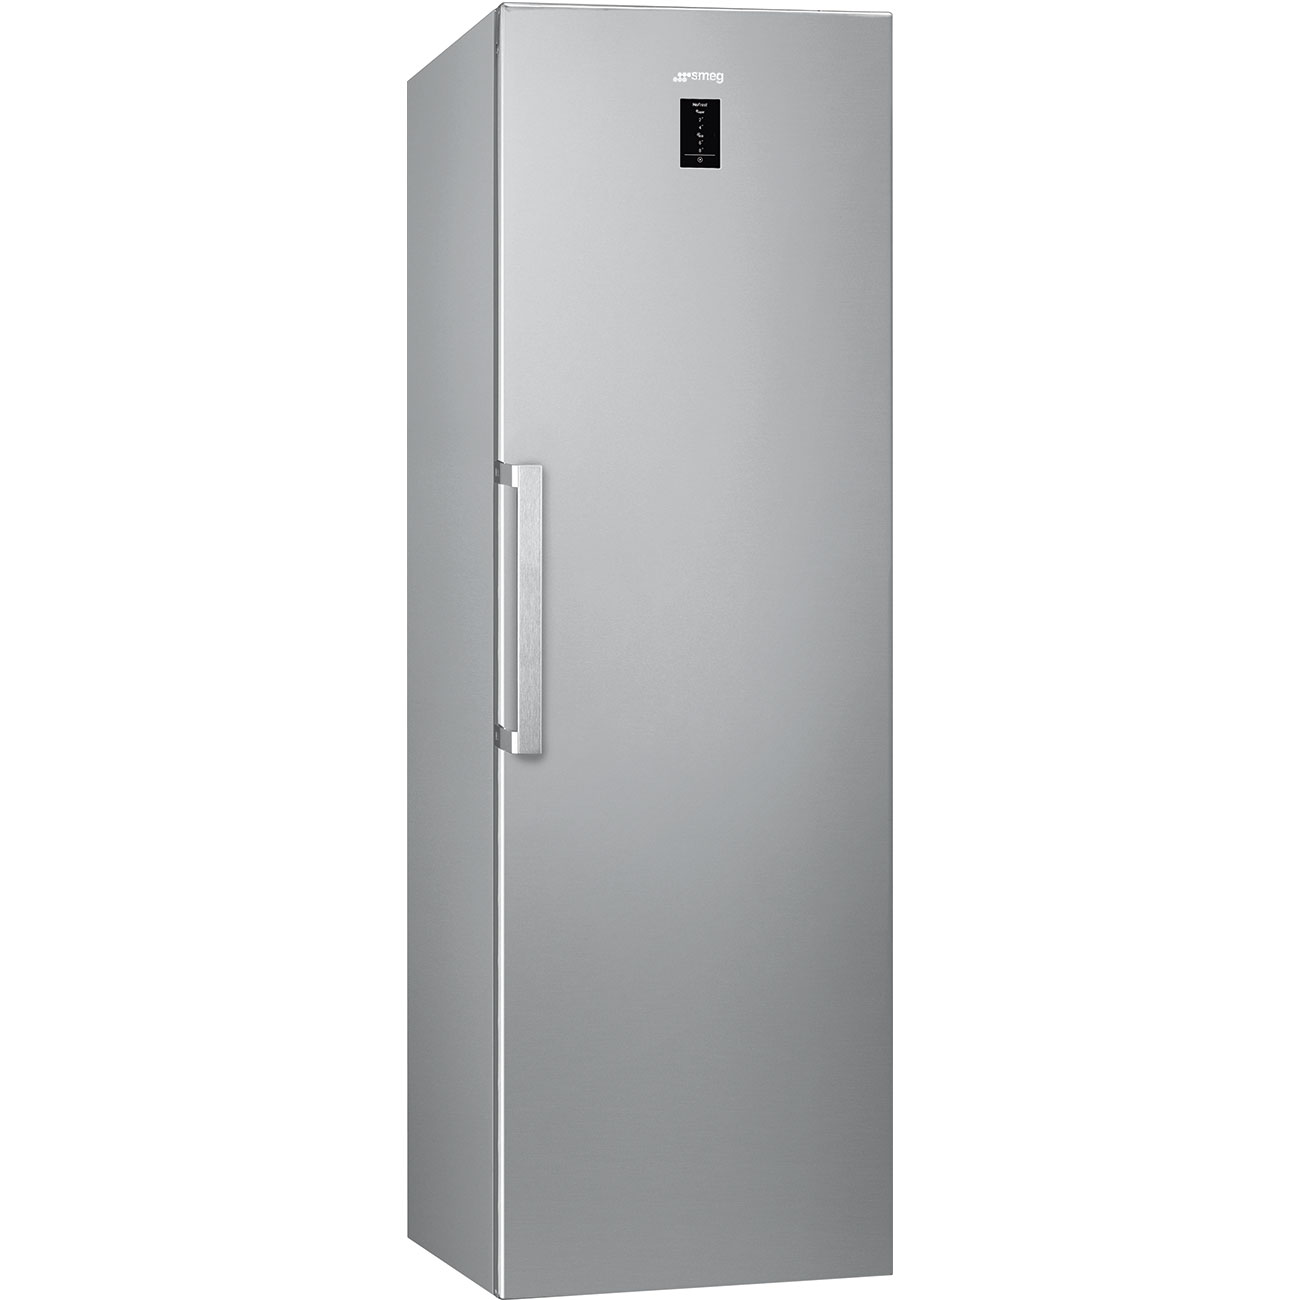 One Door Free standing refrigerator - Smeg_1